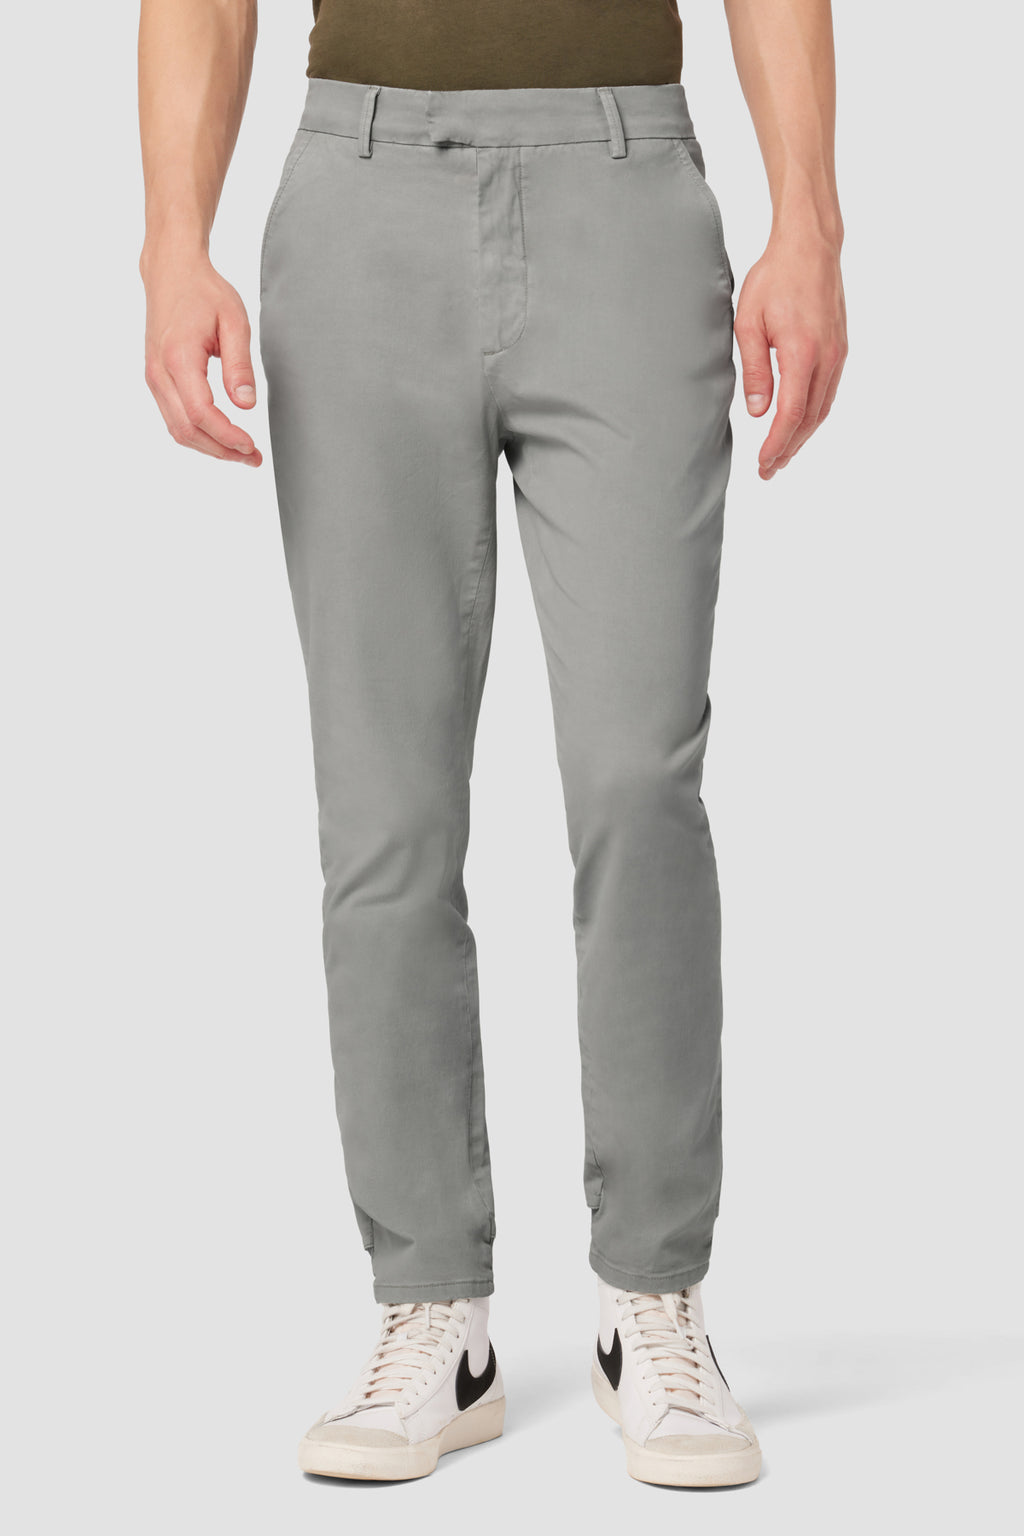 Shop Men's Pants at Hudson Jeans | Hudson Jeans